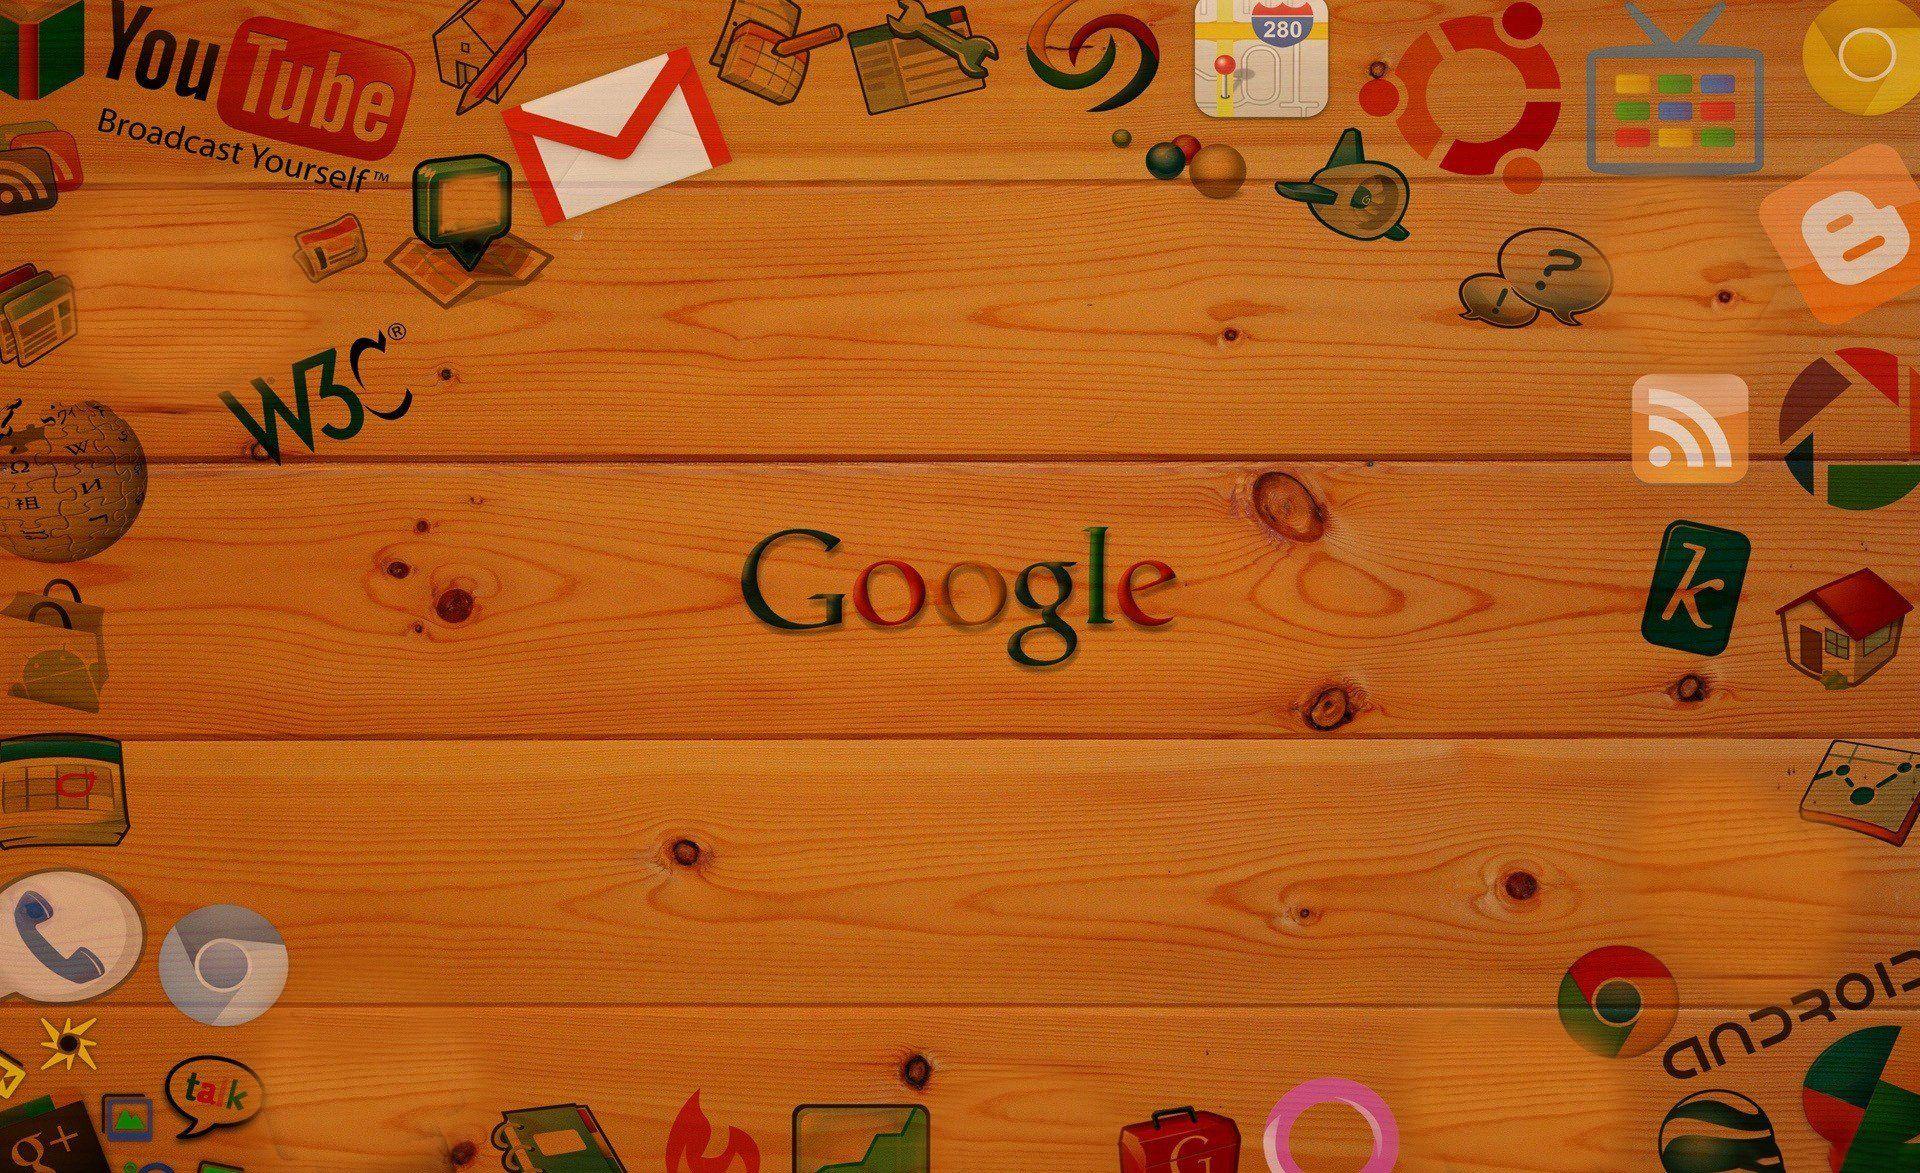 Google Desktop Backgrounds Wallpaper Cave HD Wallpapers Download Free Map Images Wallpaper [wallpaper376.blogspot.com]